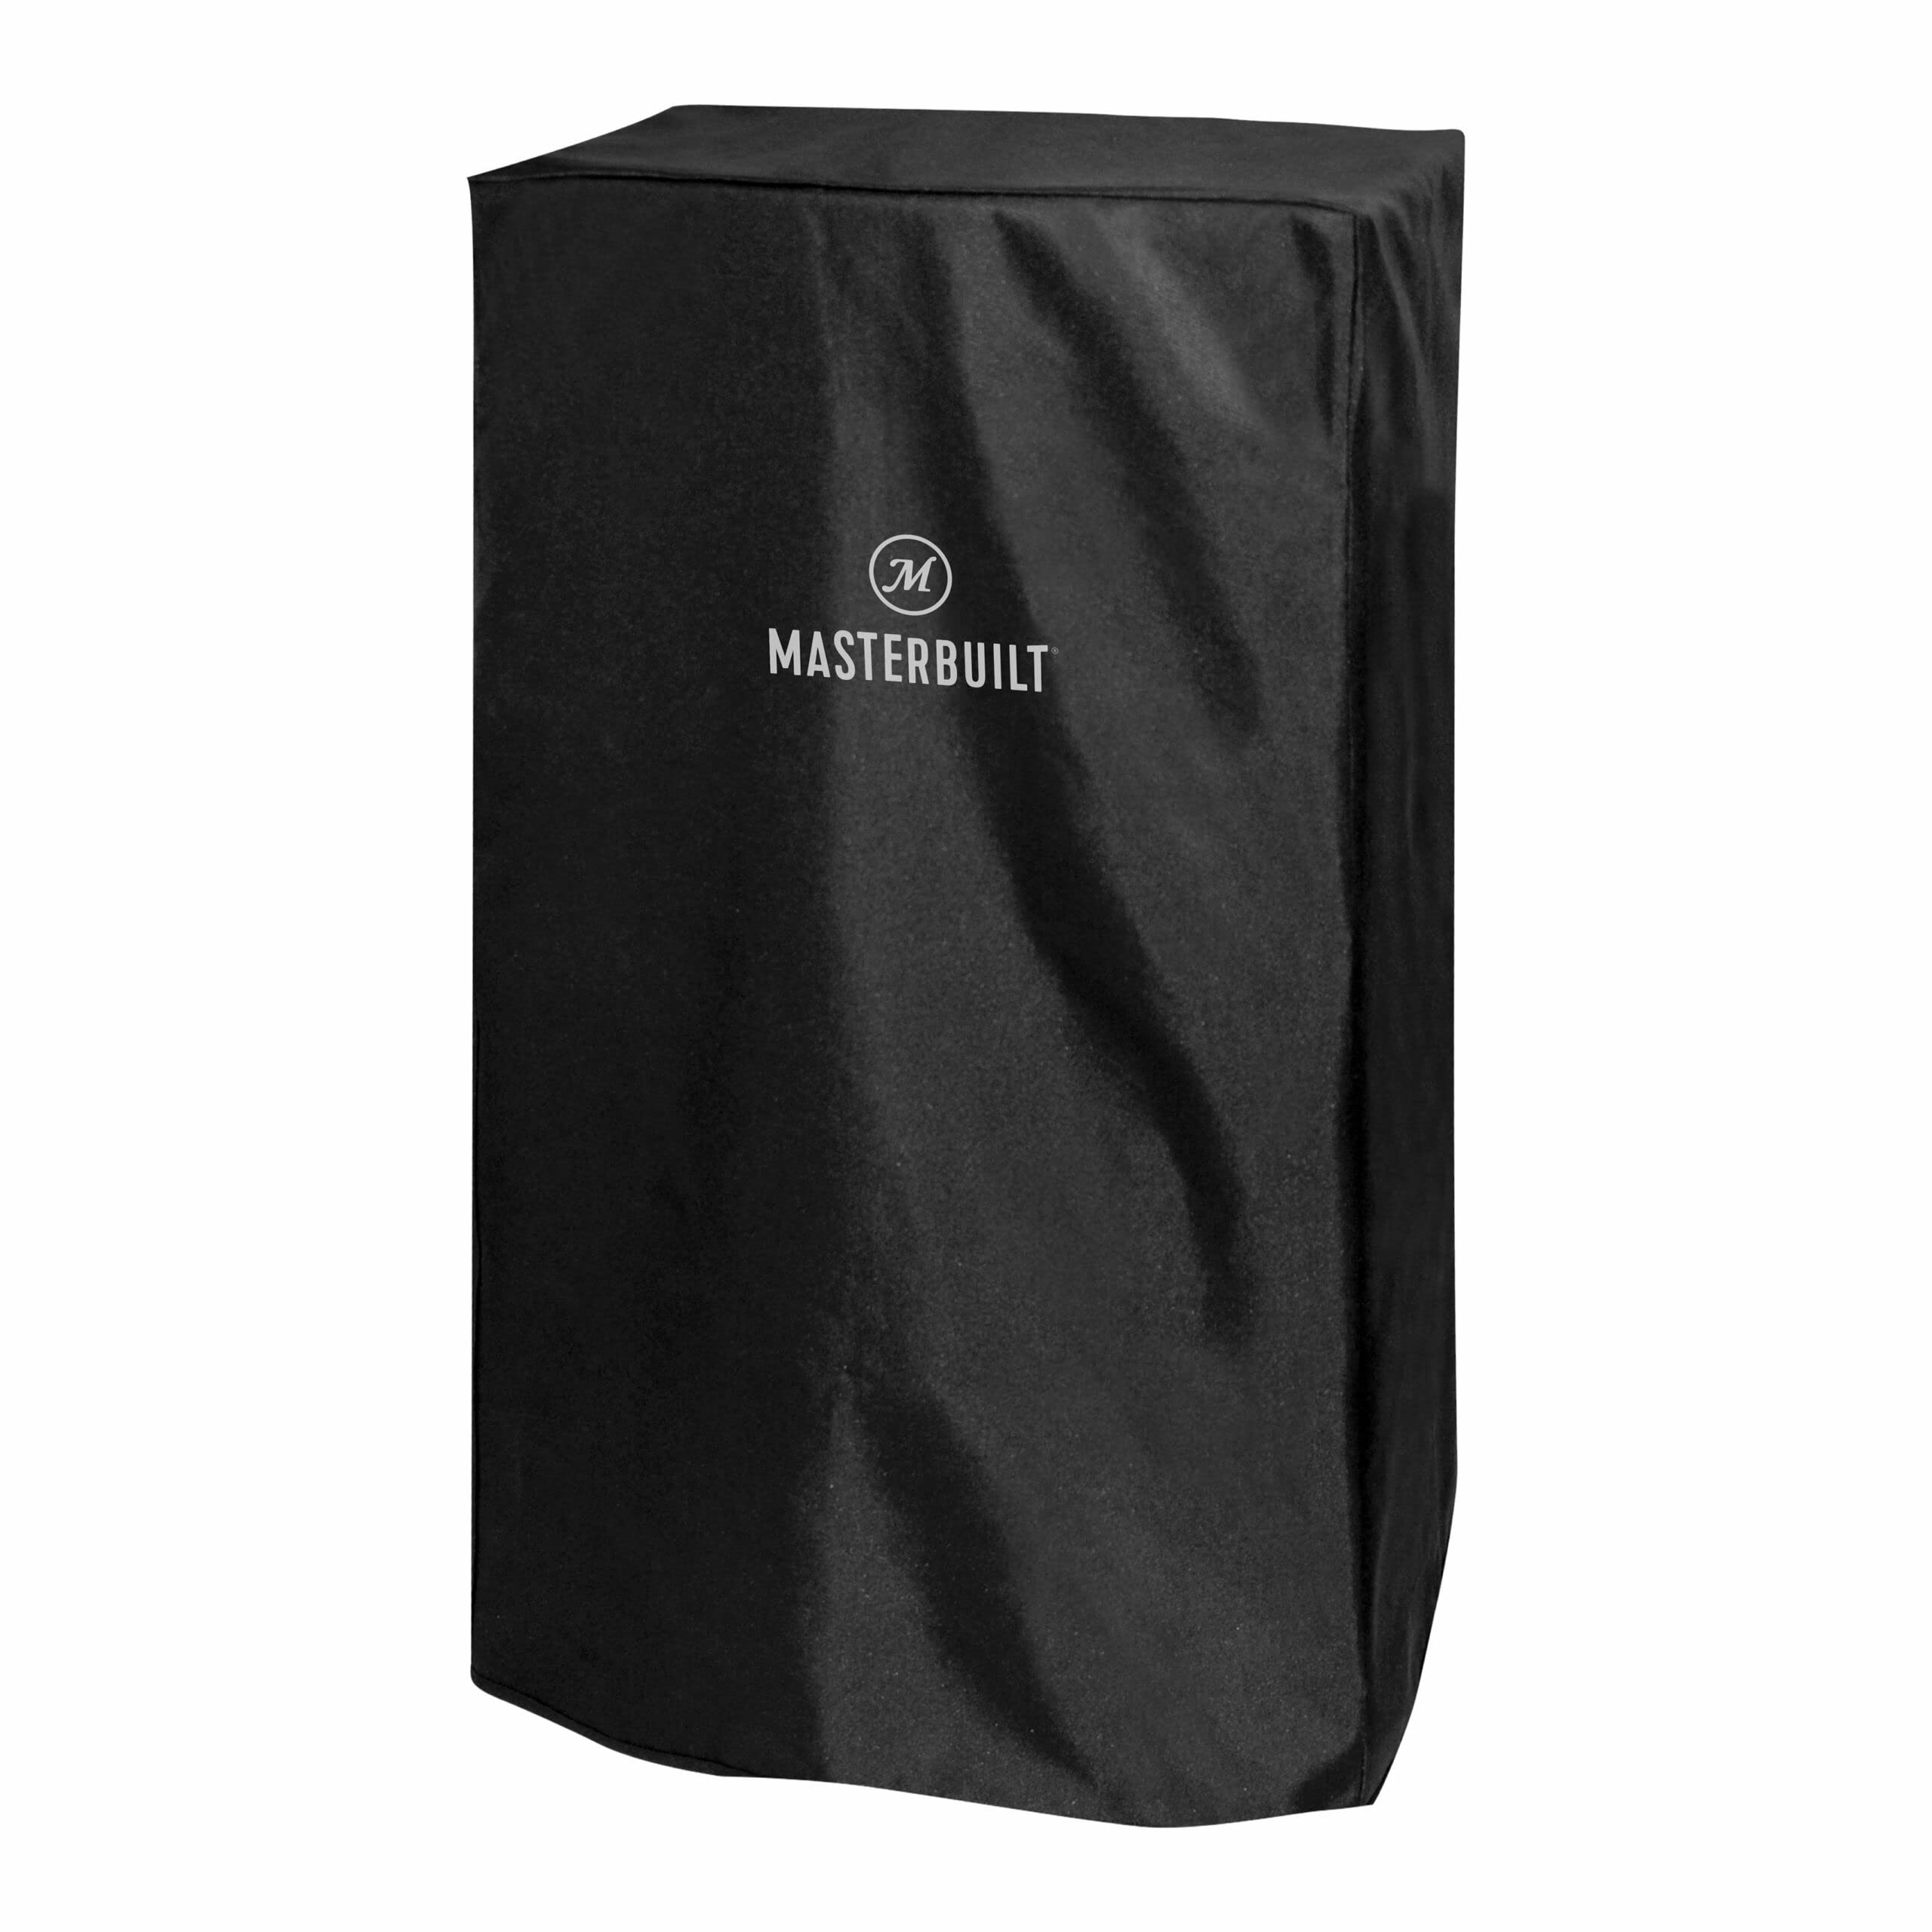 30" Masterbuilt Digital Electric Smoker Cover $7.60 + Free S&H w/ Prime ~ Amazon